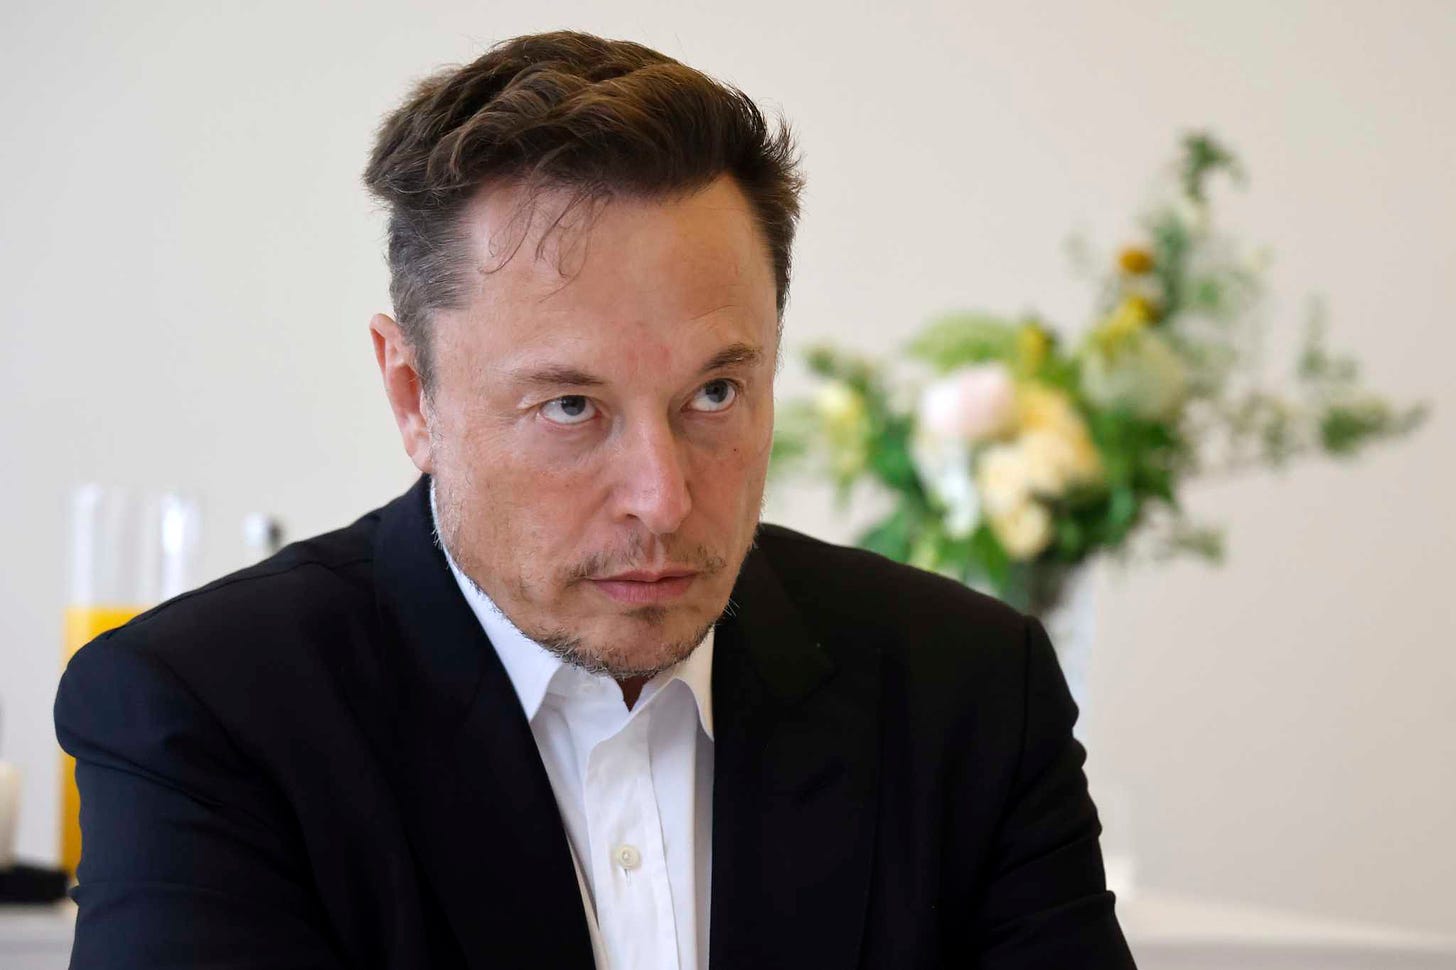 Elon Musk's latest Twitter stunt cements his right-wing agenda